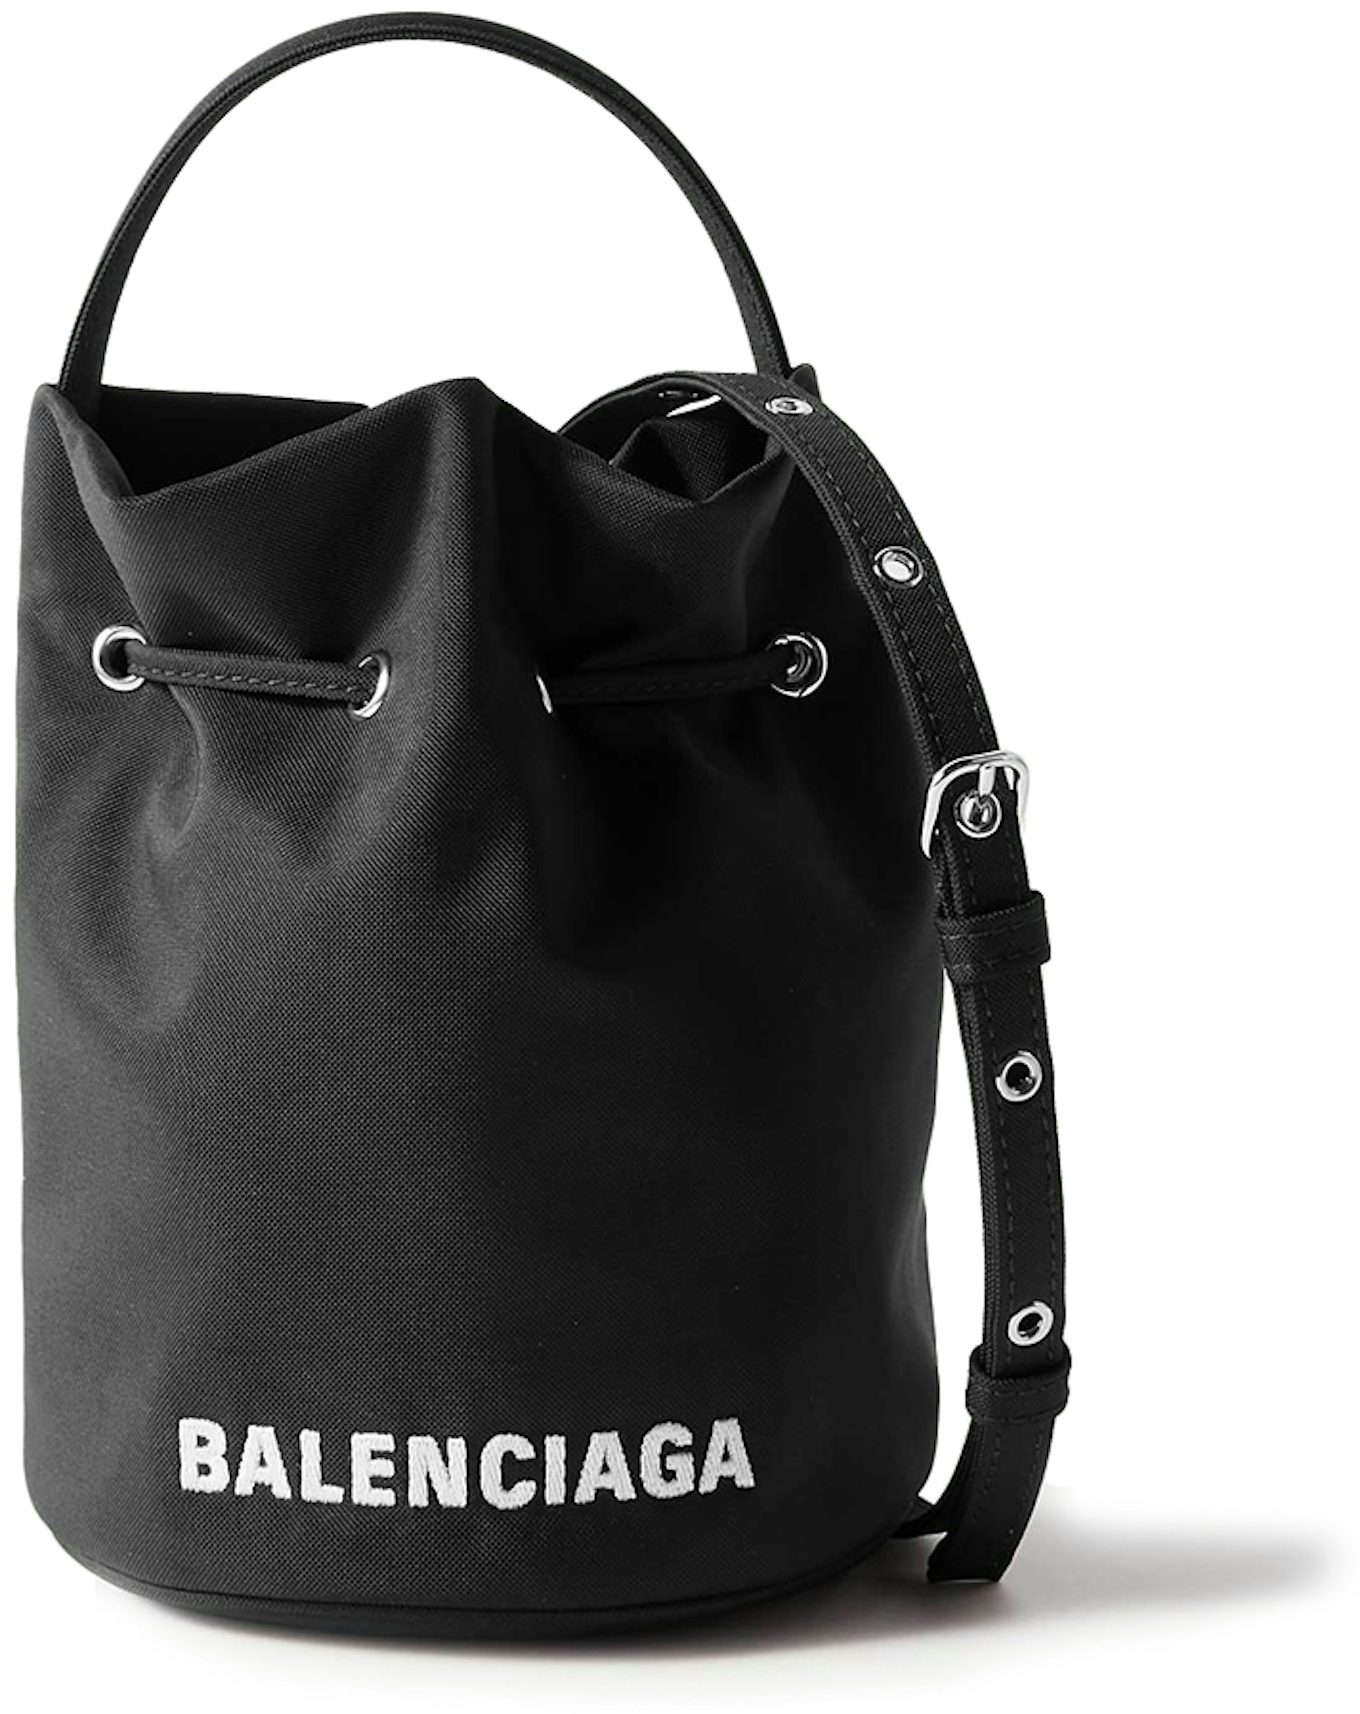 Balenciaga Wheel Shell Drawstring Bucket Bag XS Black/White